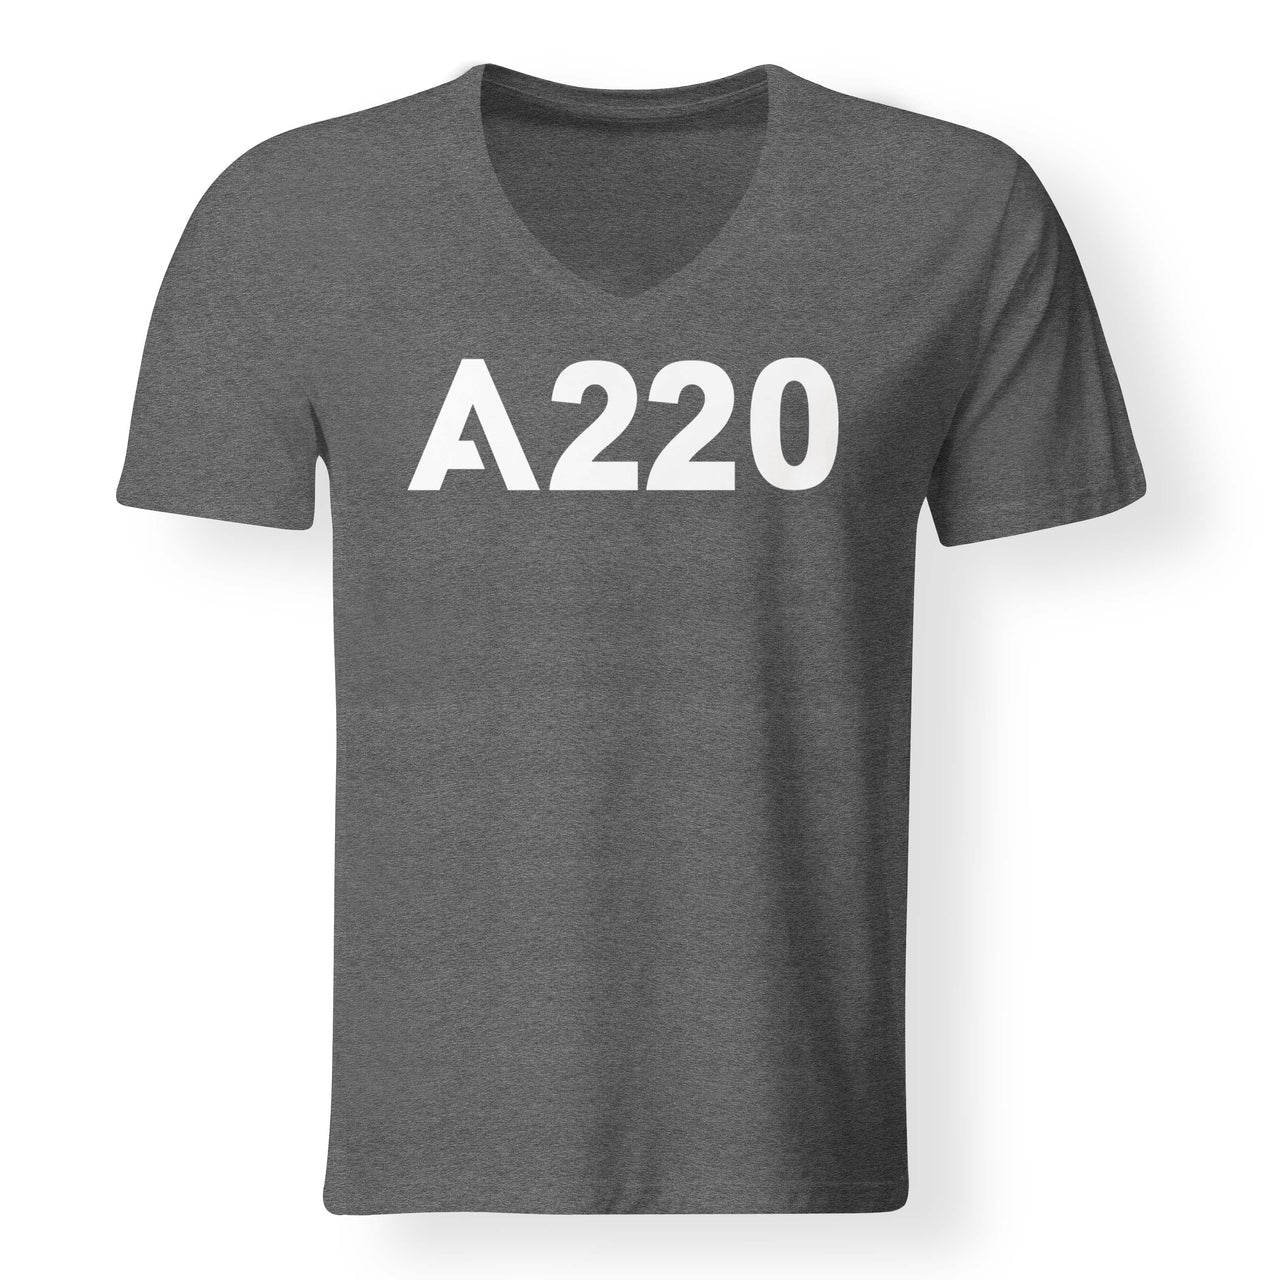 A220 Flat Text Designed V-Neck T-Shirts